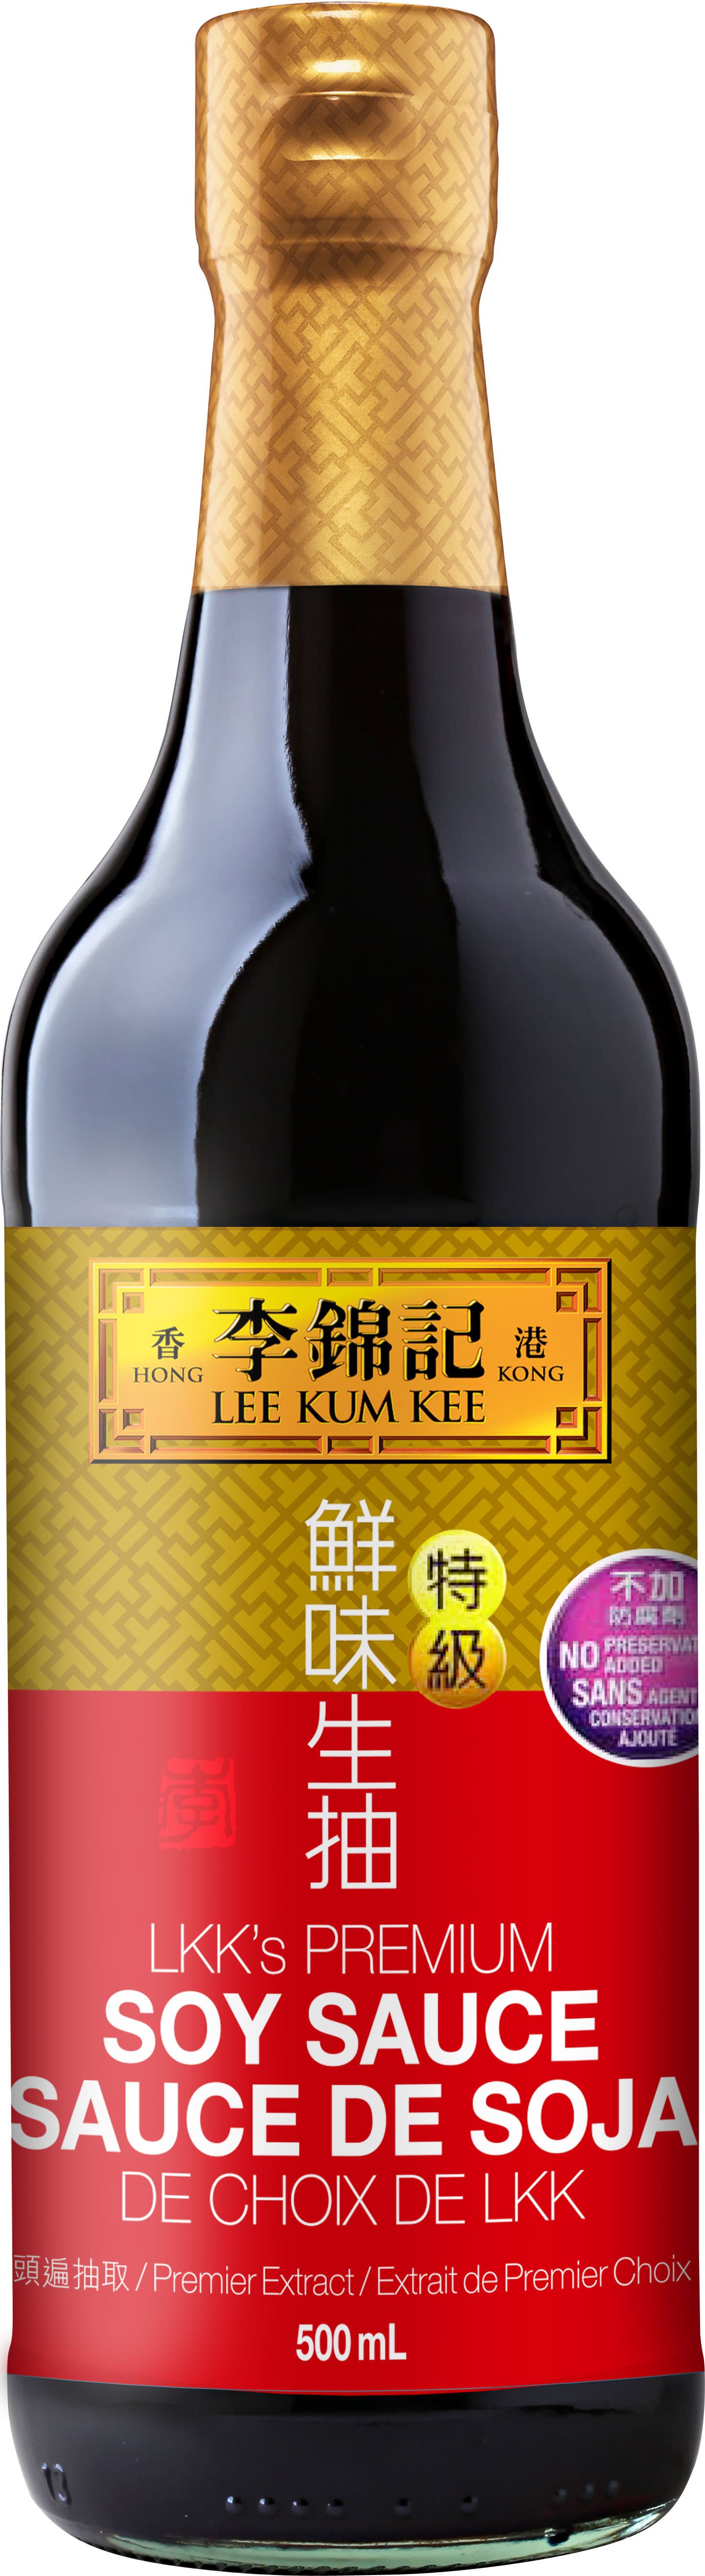 LKK’s Premium Soy Sauce 500ml 